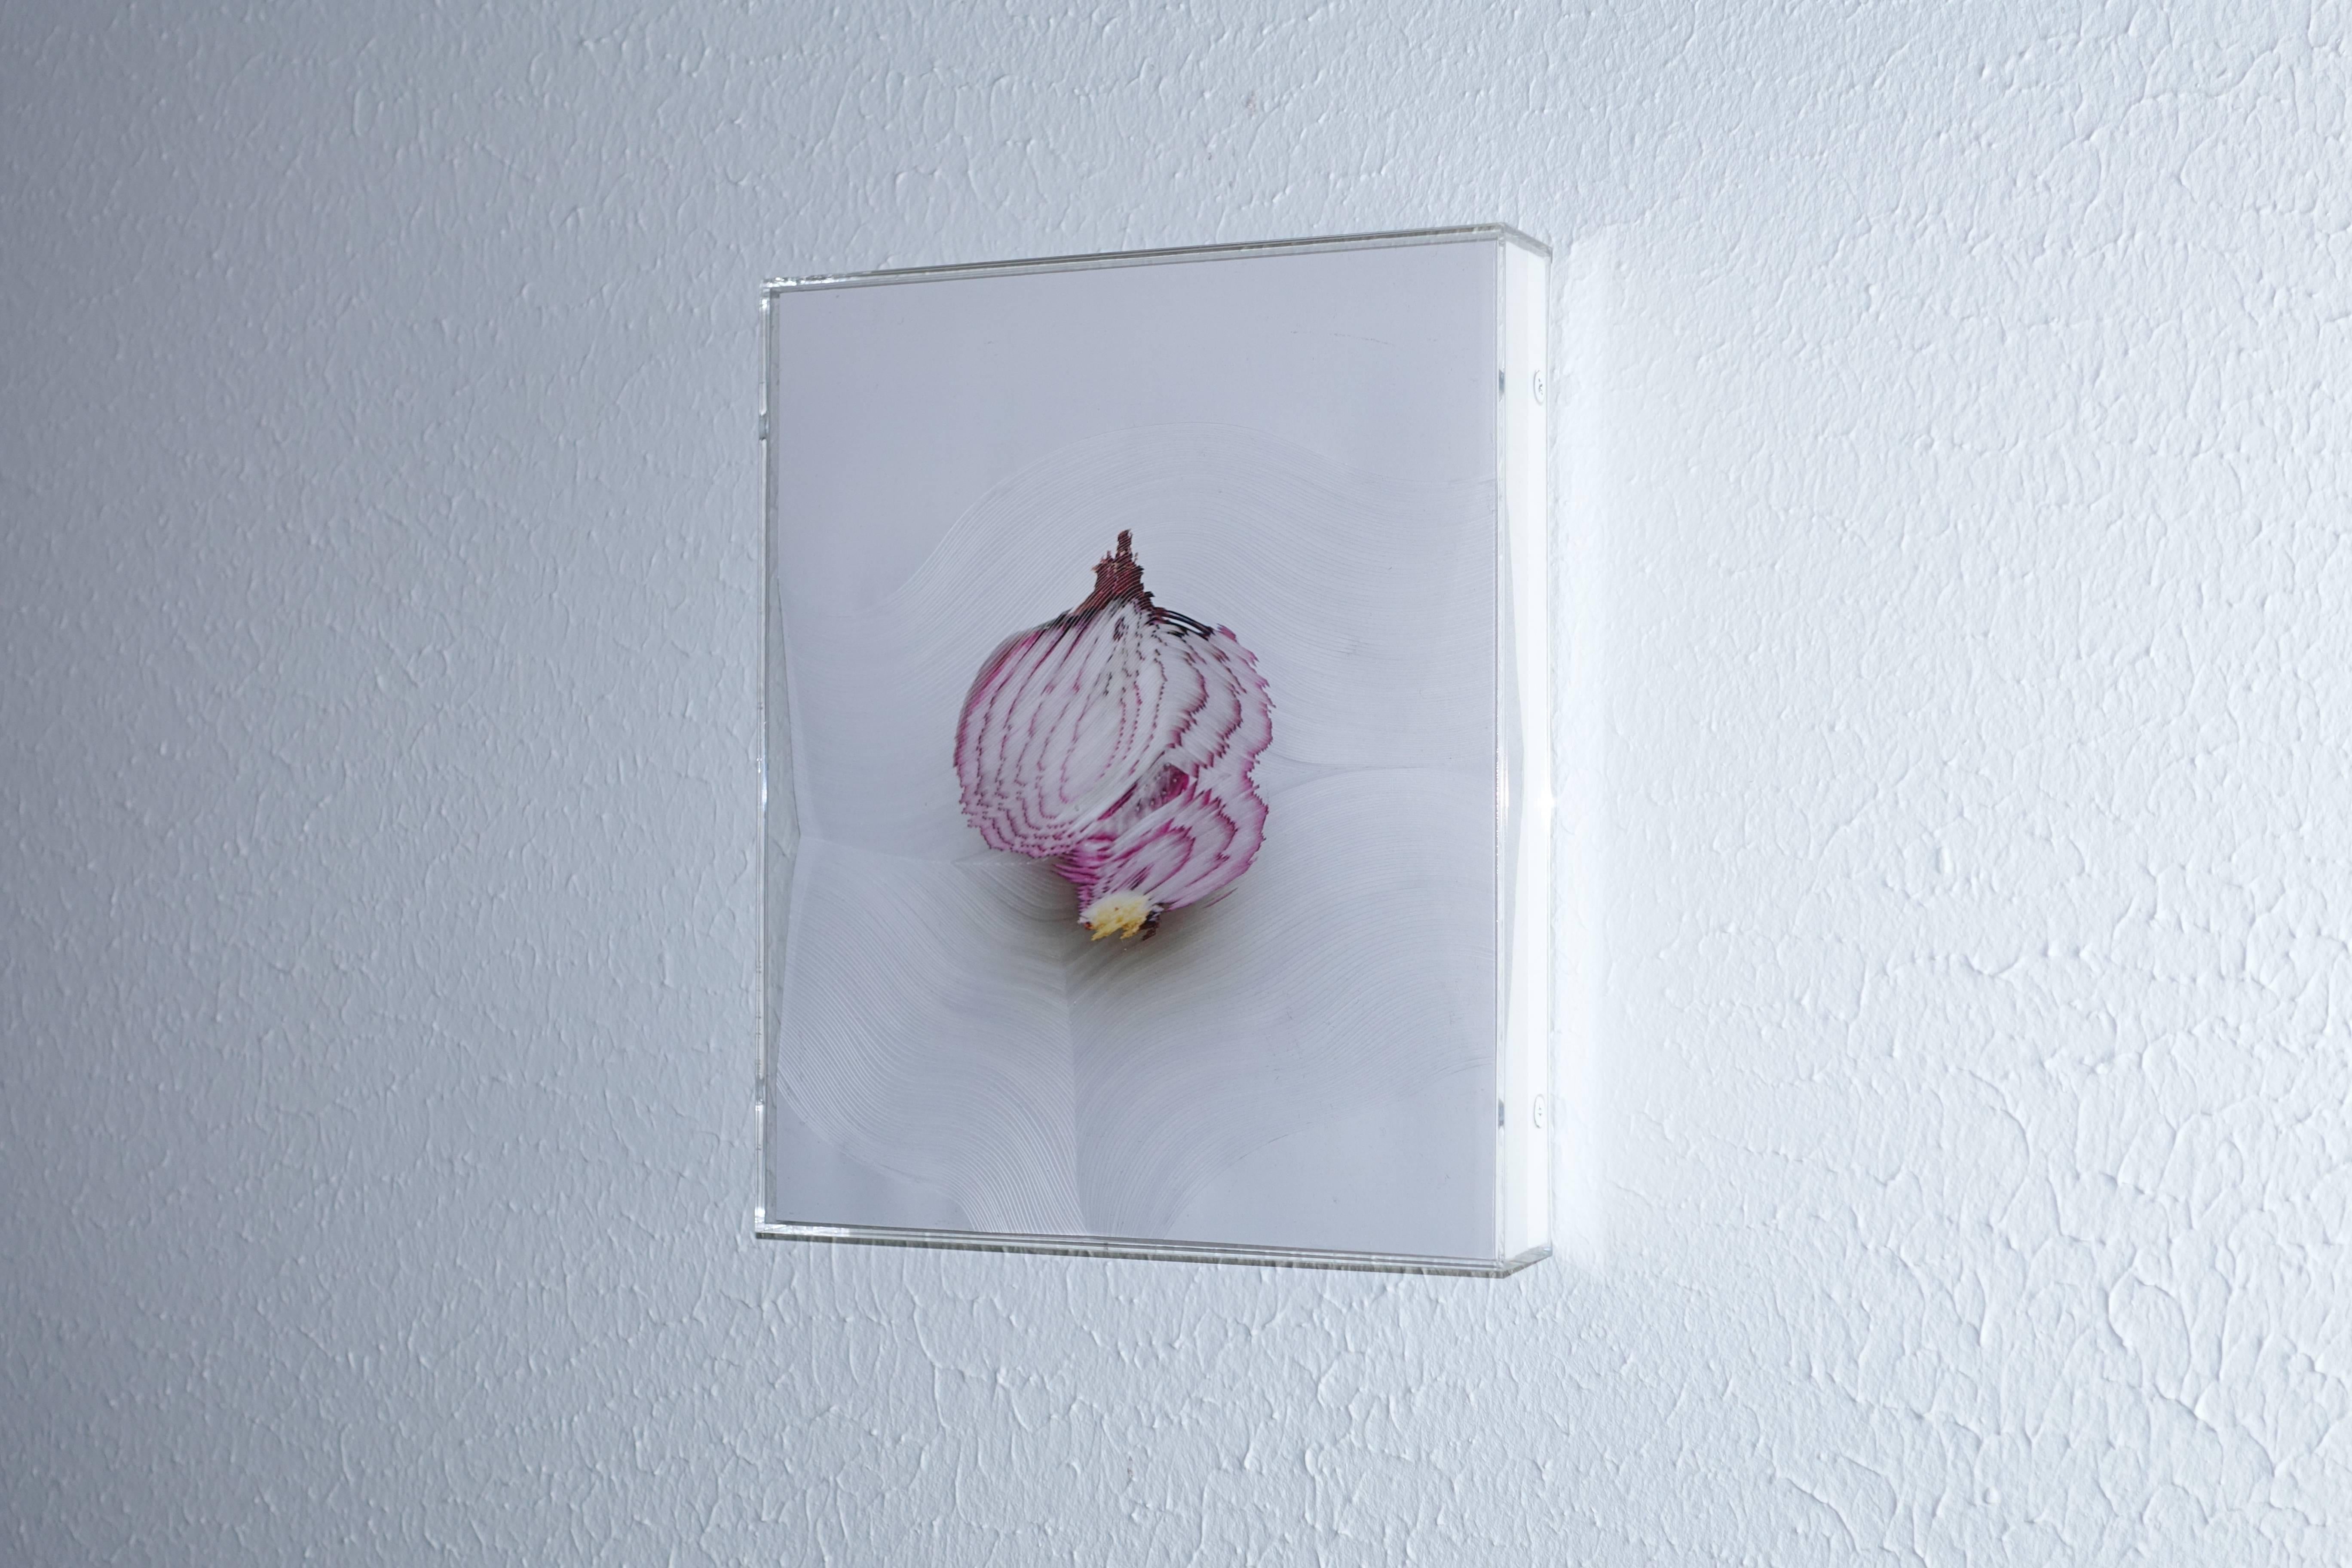 Nerhol Still-Life Sculpture - "Slicing the Onion No. 005" Series 1 of 6: 3-D engraved wall sculpture